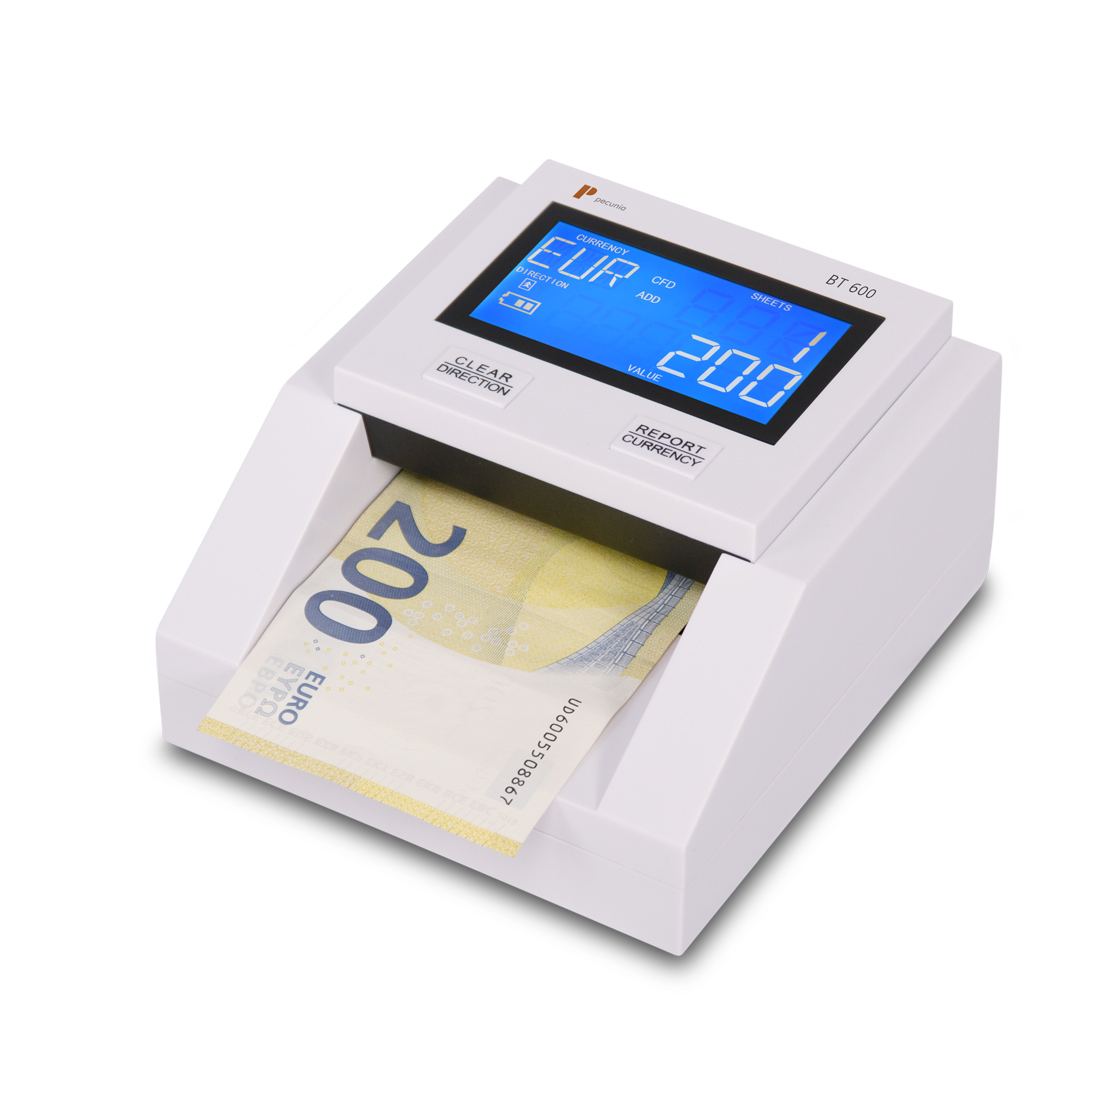 Counterfeit detector Pecunia BT 600 mobile